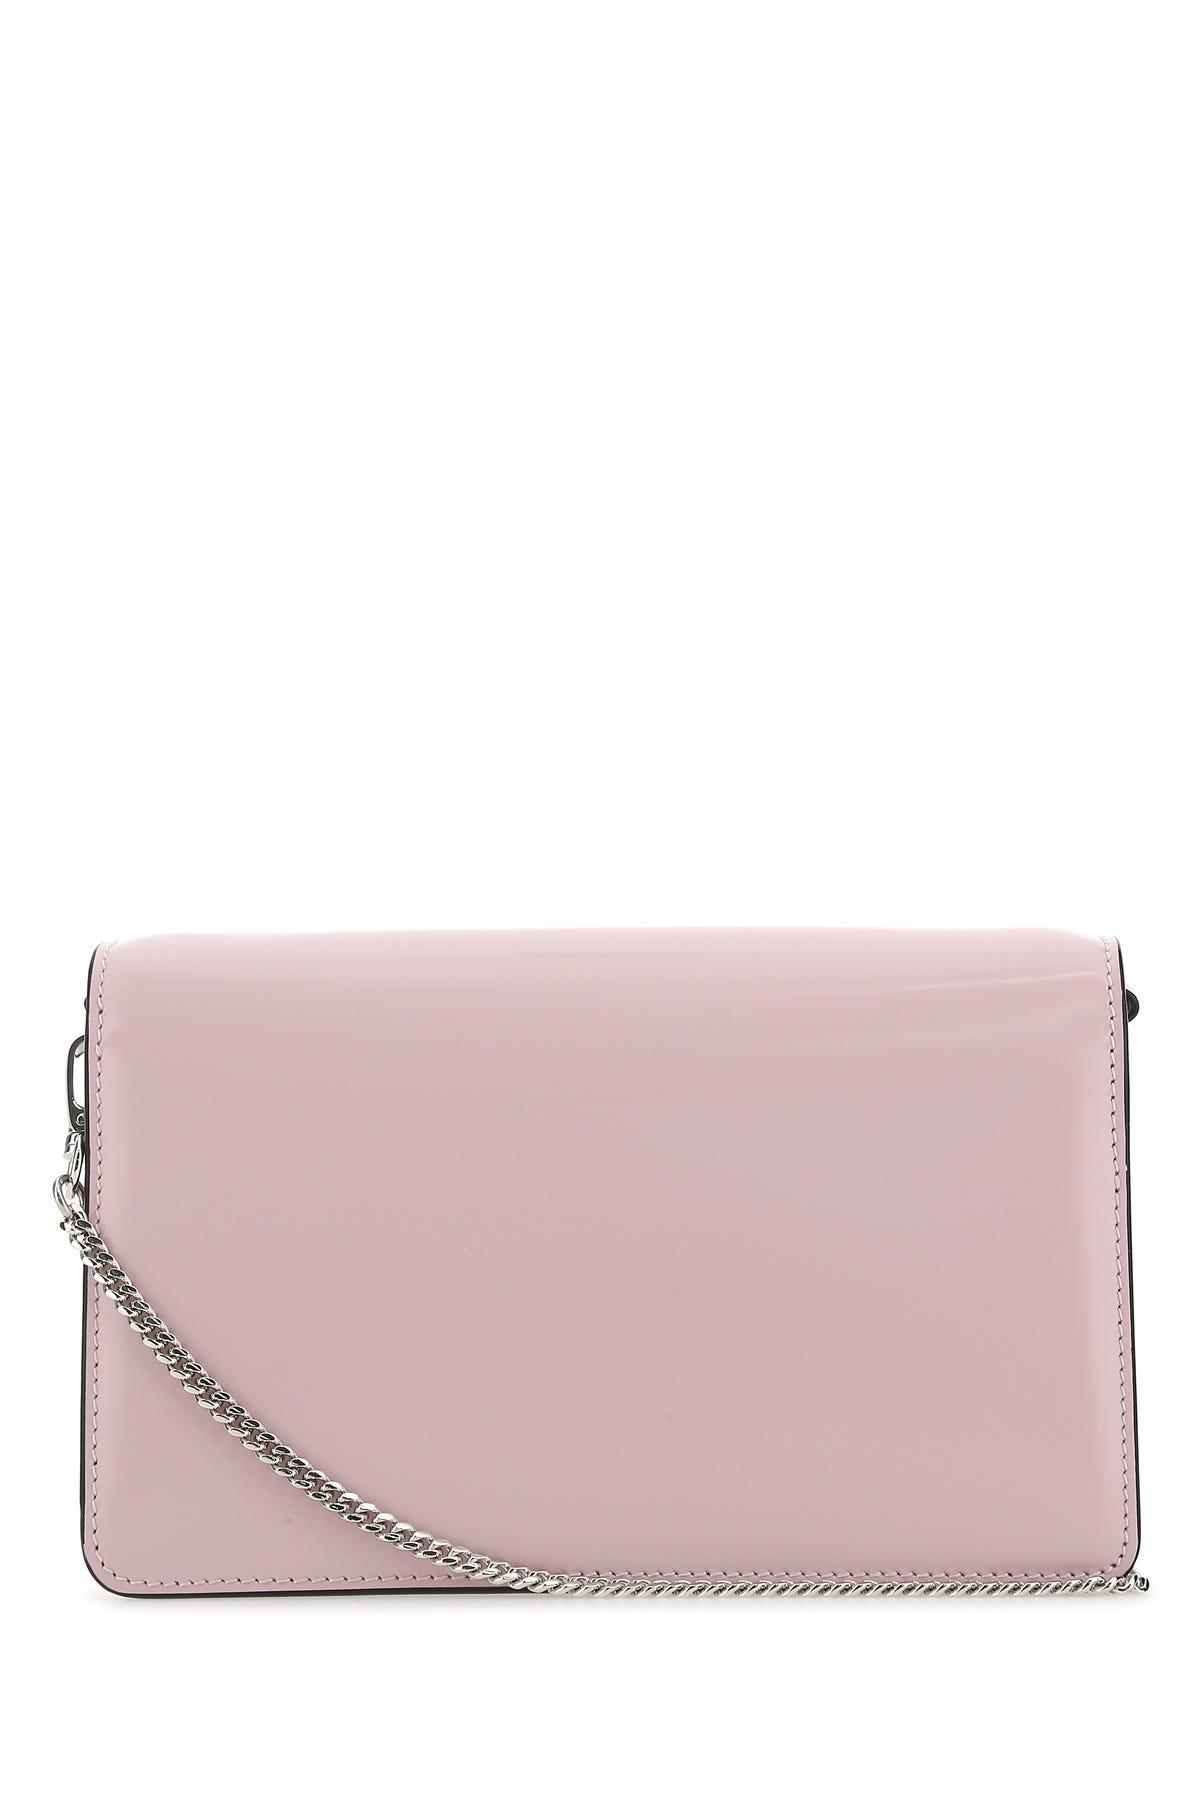 Moedig aan dagboek niets Prada Pastel Leather Clutch in Pink | Lyst